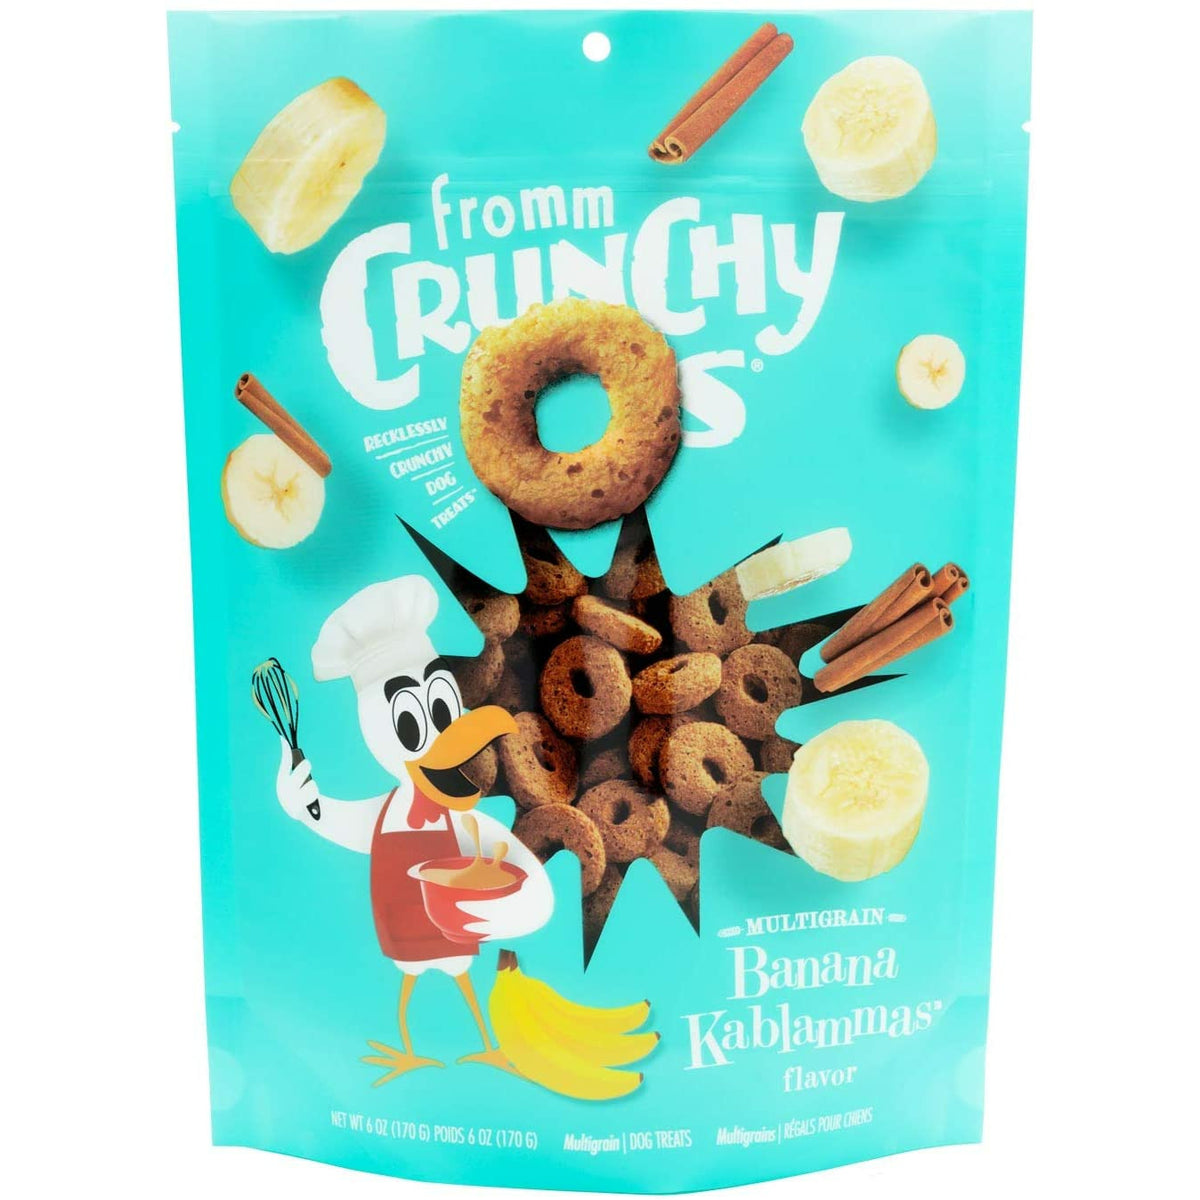 Fromm Crunchy Os - Banana Kablama Dog Treats (6oz)